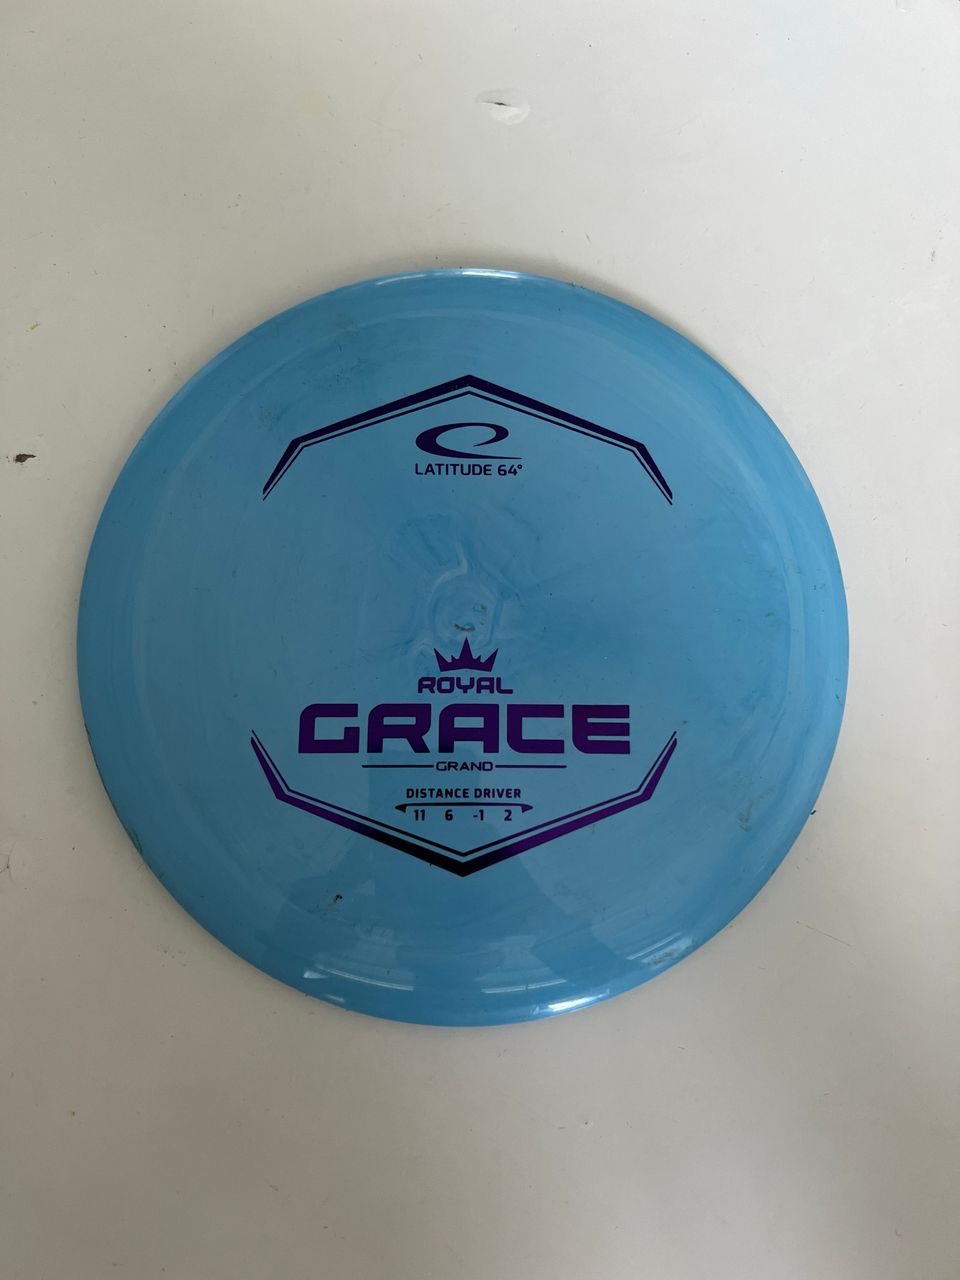 Grand Grace Latitude 64 Frisbeegolf kiekko